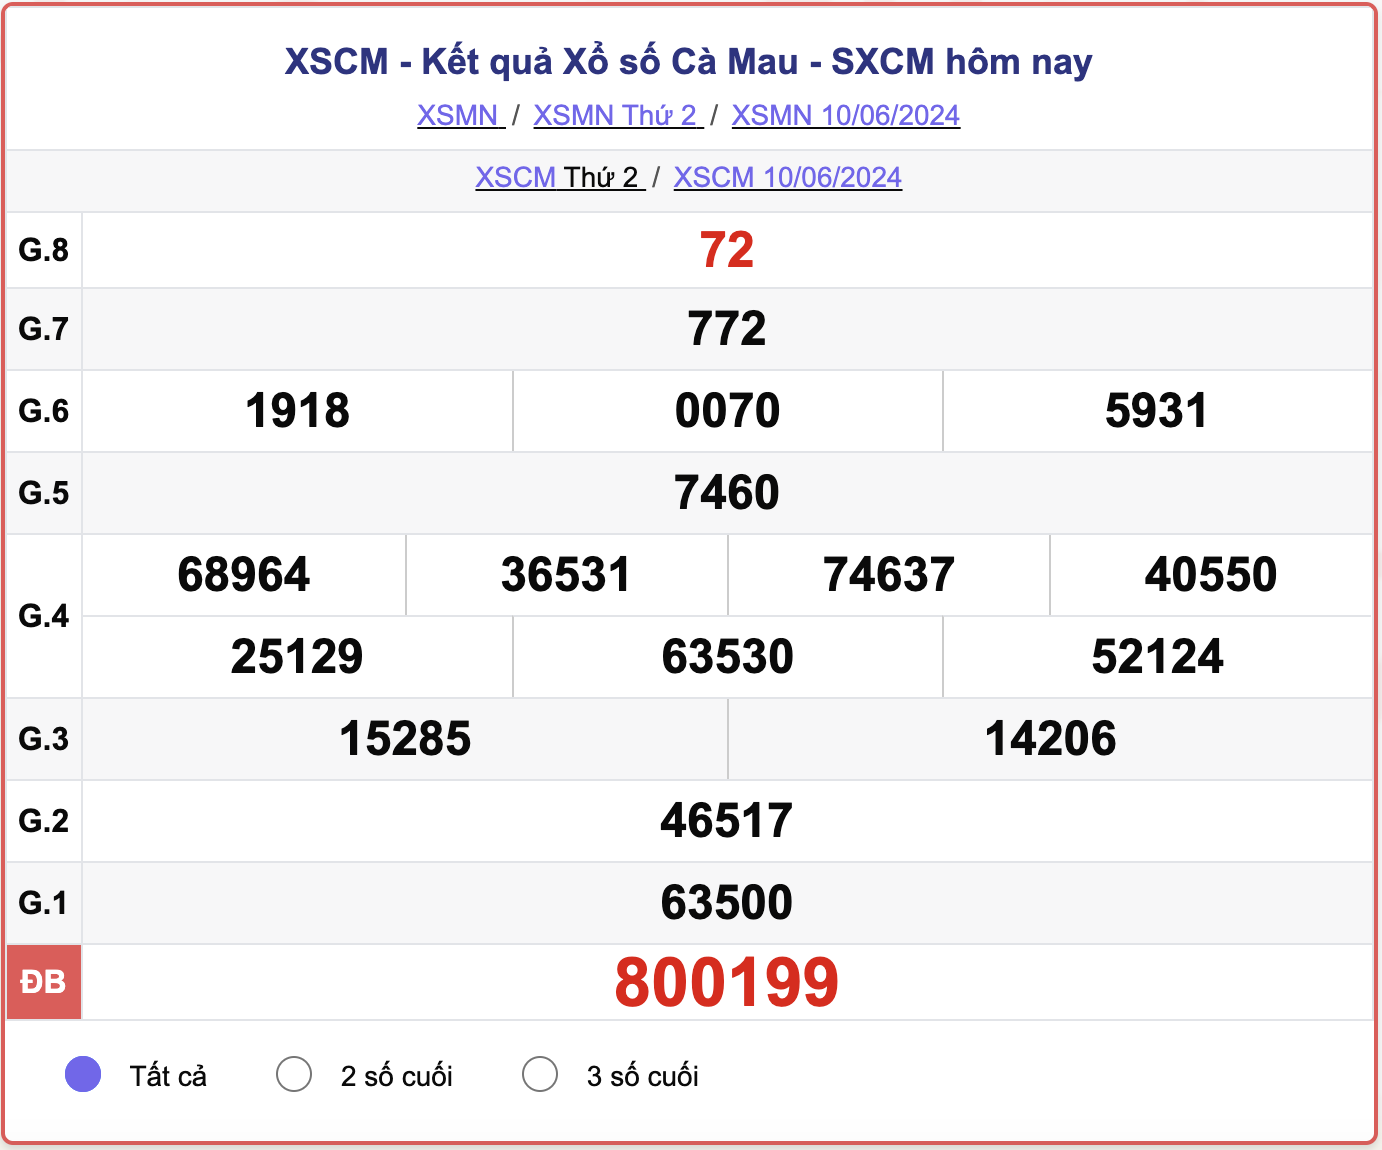 XSCM 10/6, kết quả xổ số Cà Mau hôm nay 10/6/2024.